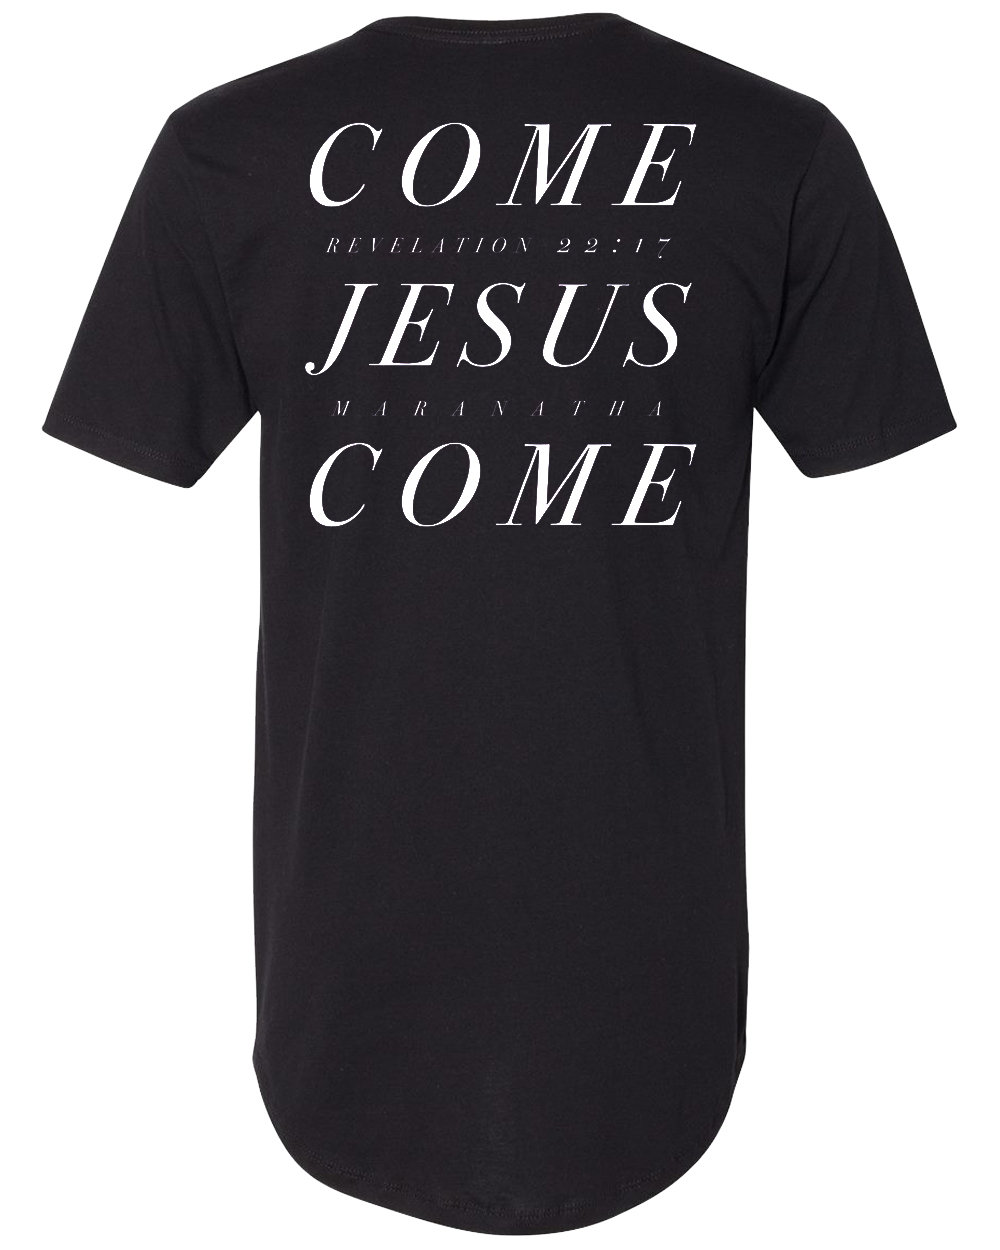 COME JESUS COME (T-SHIRT) — STEPHEN MCWHIRTER